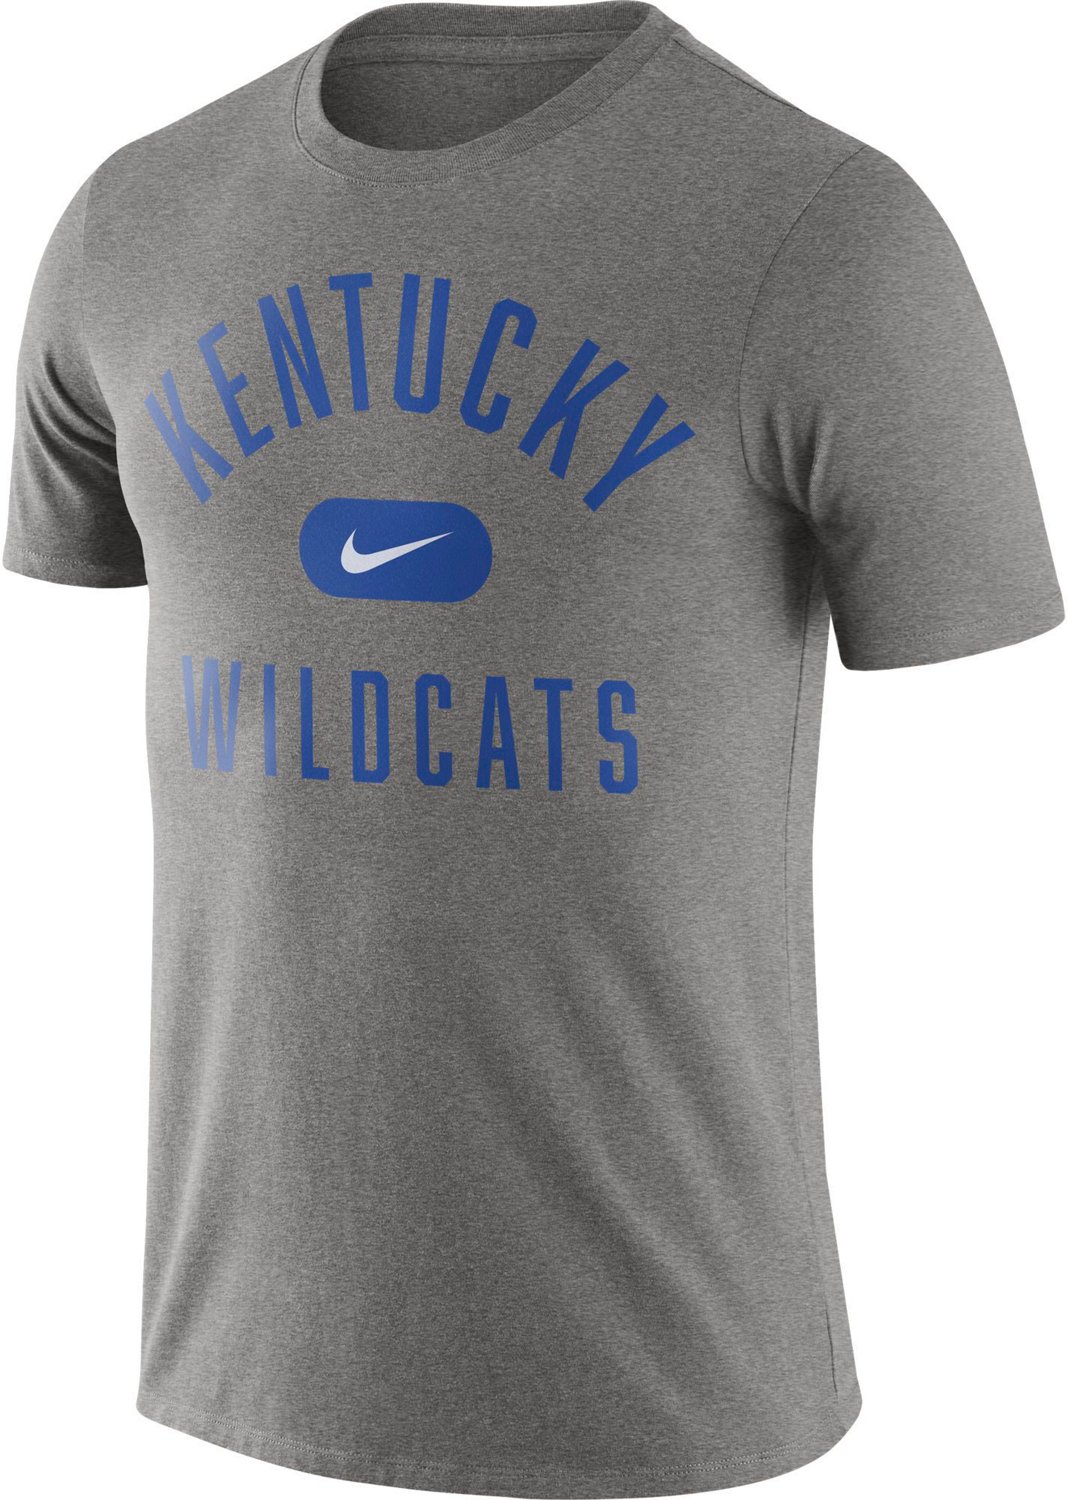 Nike Men's University of Kentucky Basketball Team Arch Short Sleeve T ...